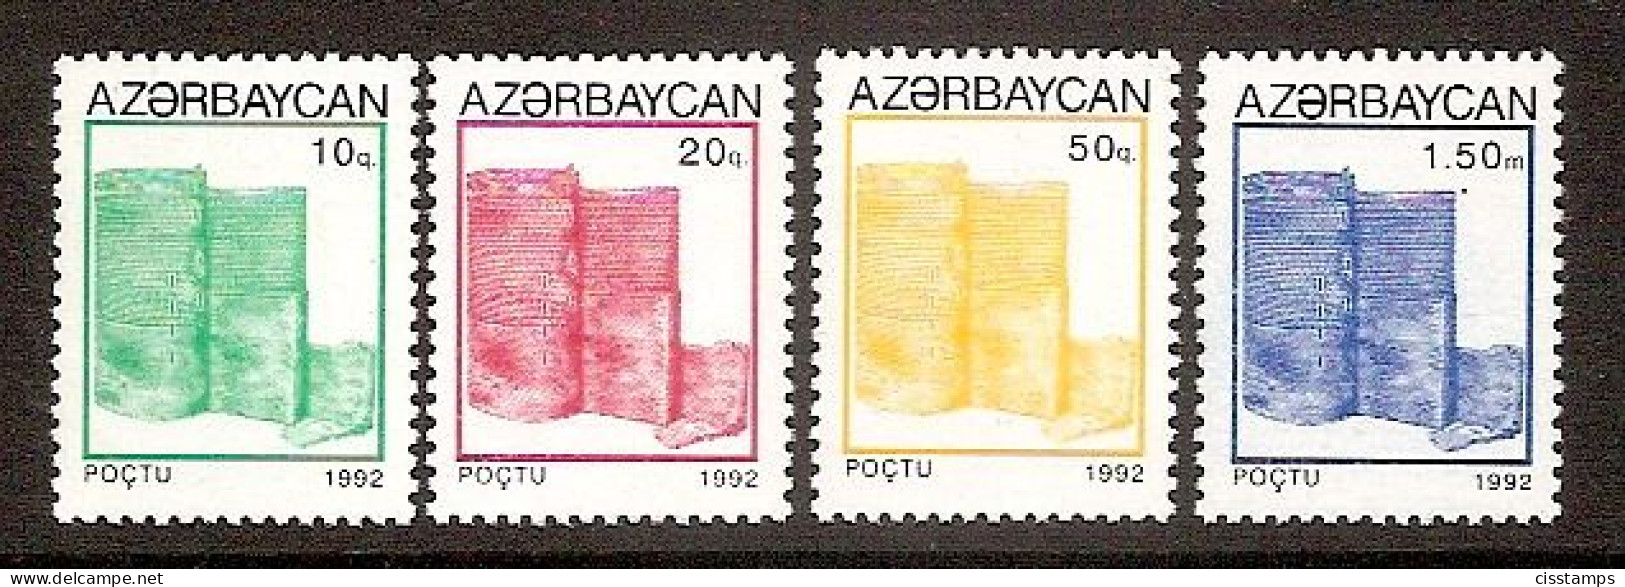 Azerbaijan 1992●Definitives●Tower Architecture●●Freimarken●Turm●Mi75-78 MNH - Azerbaïjan